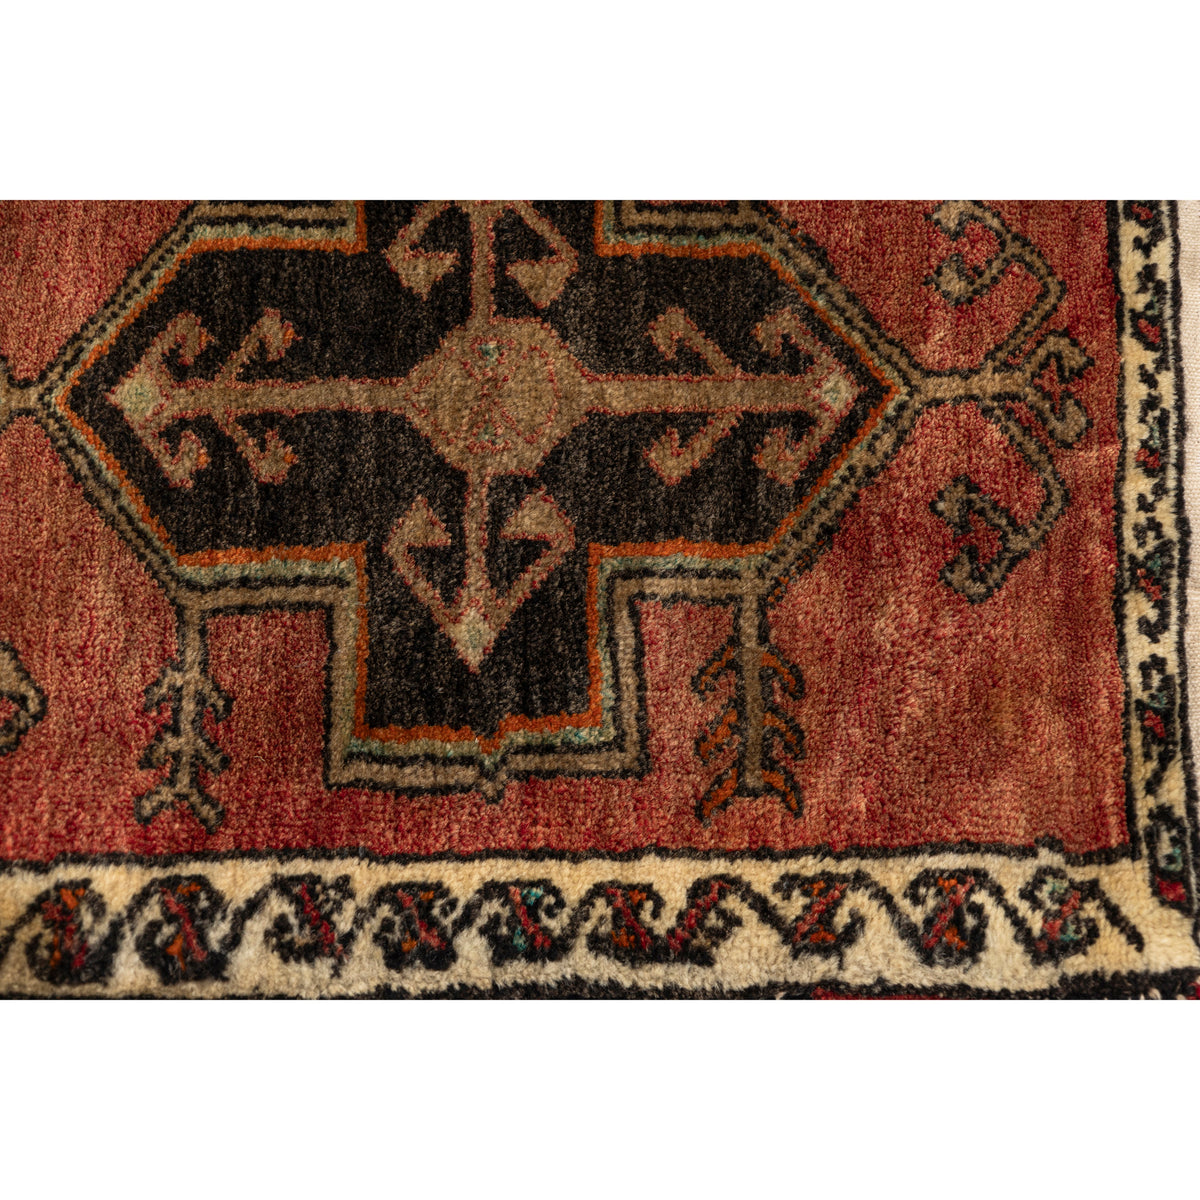 Shatrah - (1'10" x 3'7") Vintage Turkish Rug